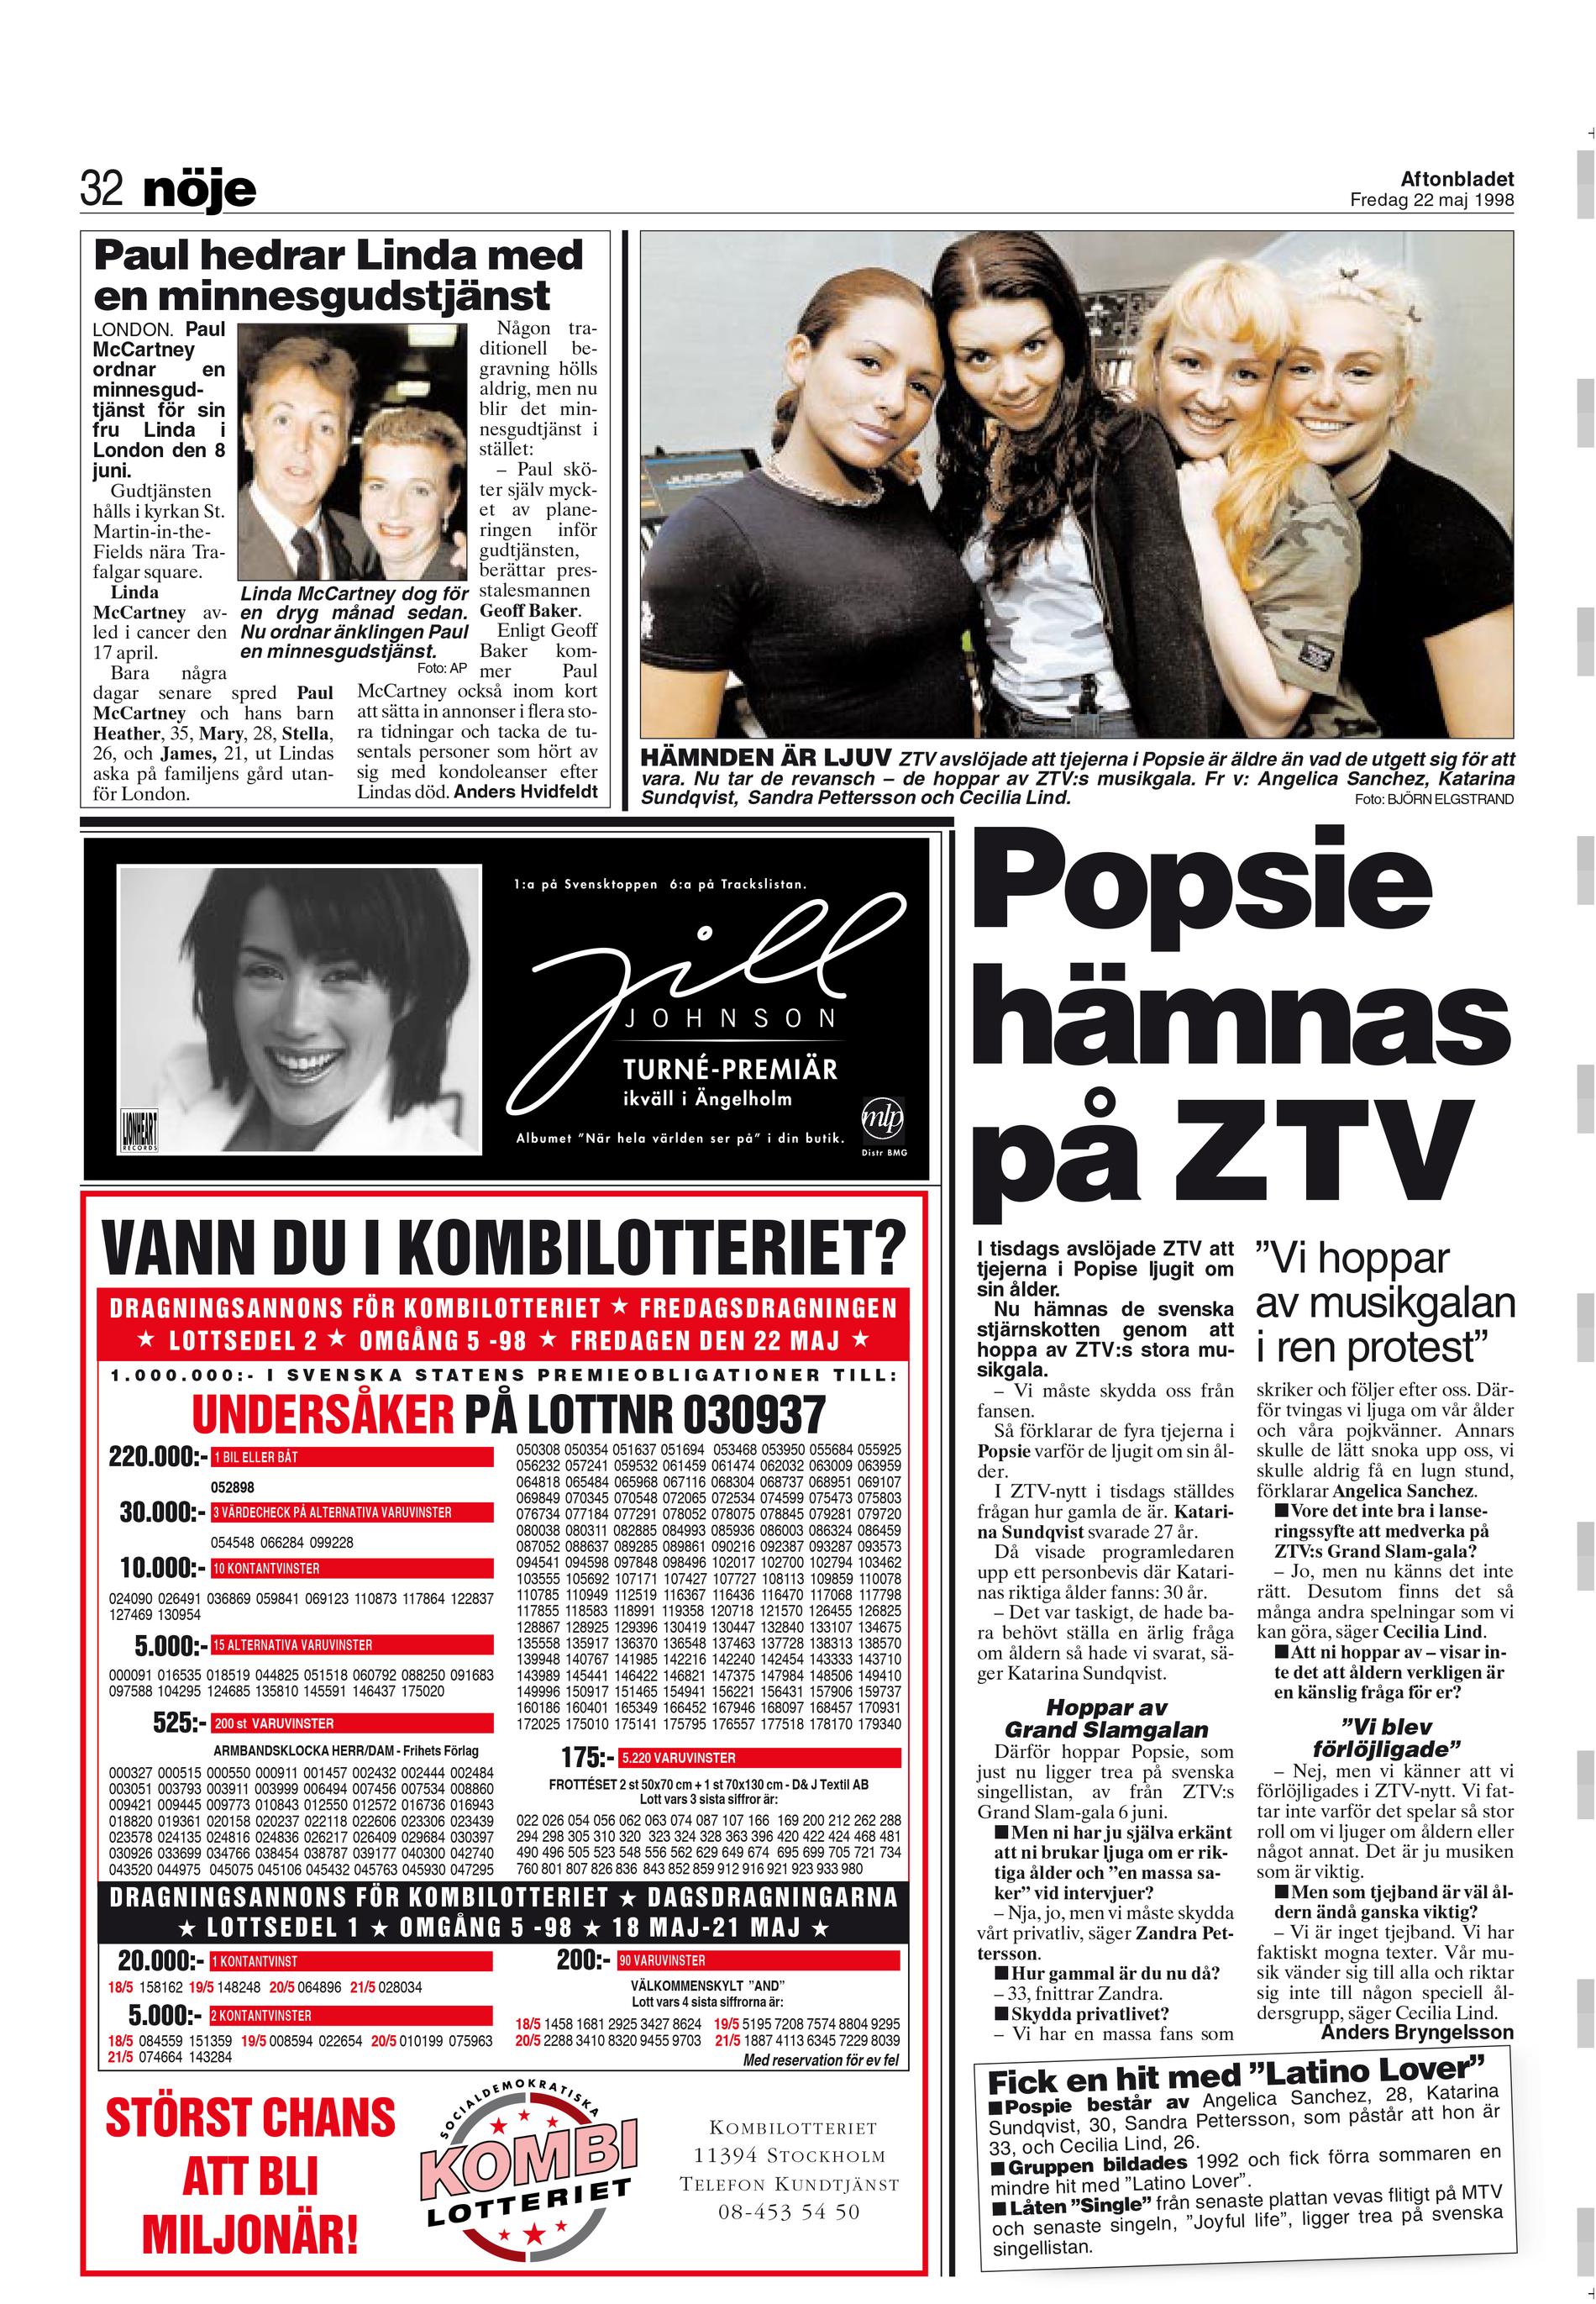 Popsie i Aftonbladet 1998